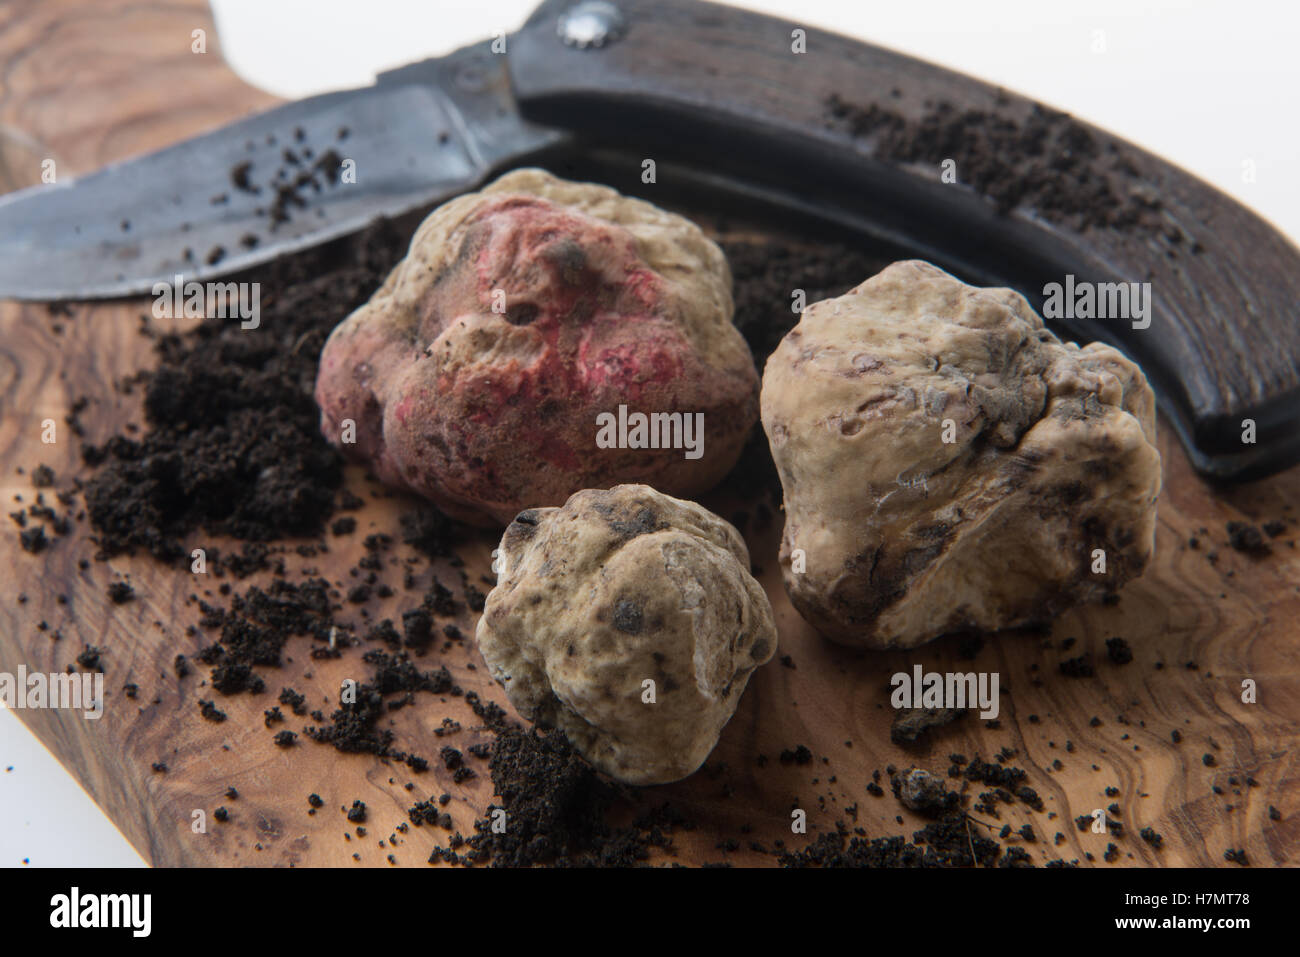 Alba white truffle tuber on wood board and truffle's knife Stock Photo